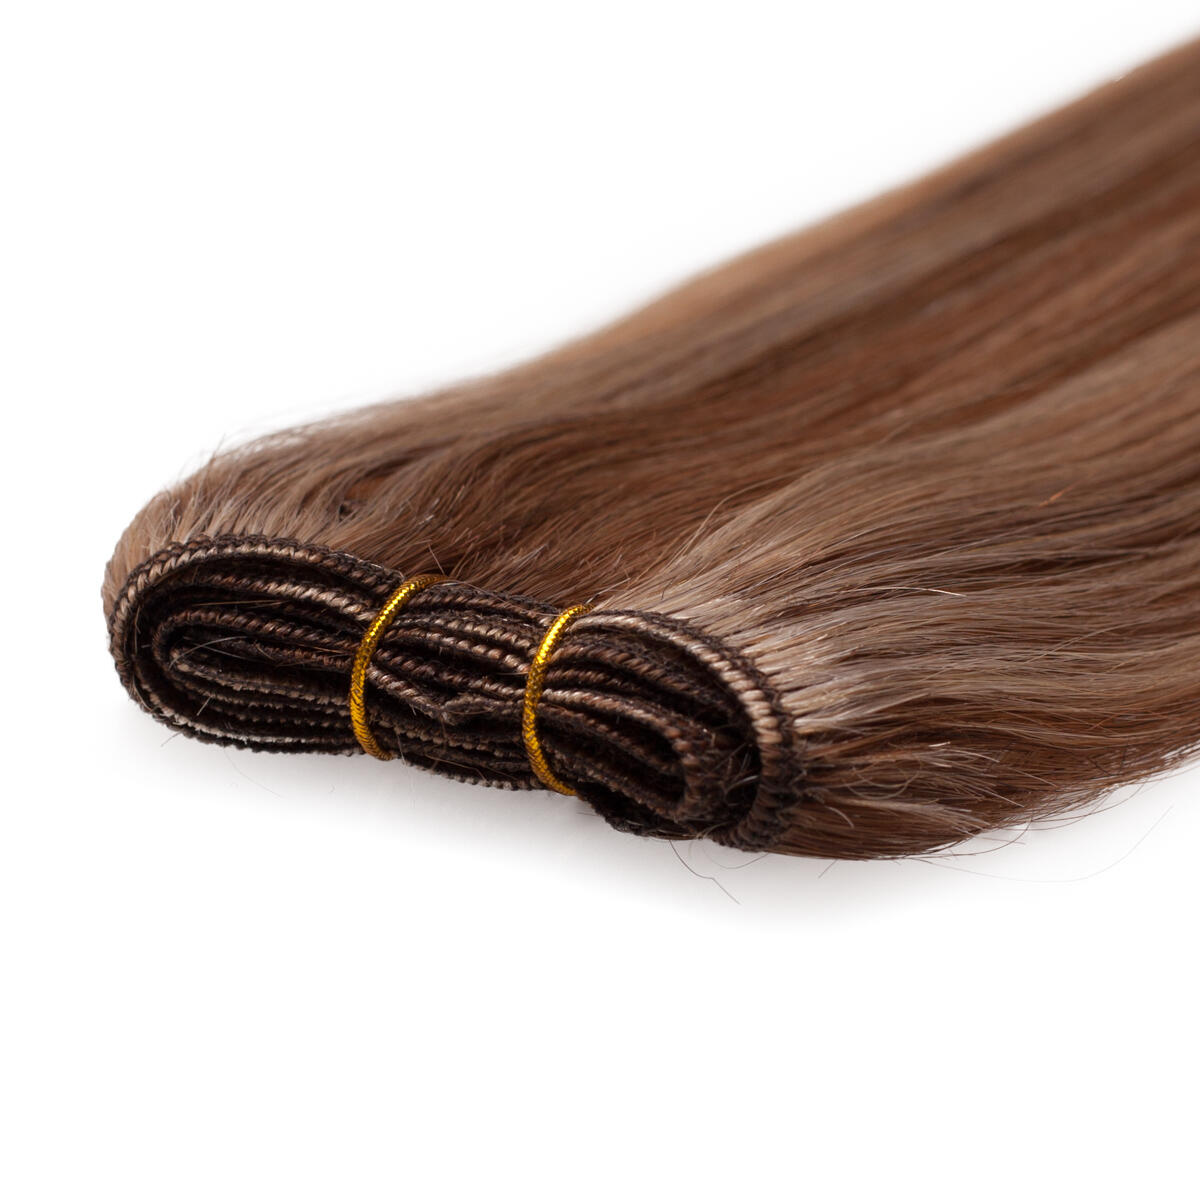 Hair Weft M5.4/7.8 Strawberry Brown Mix 50 cm